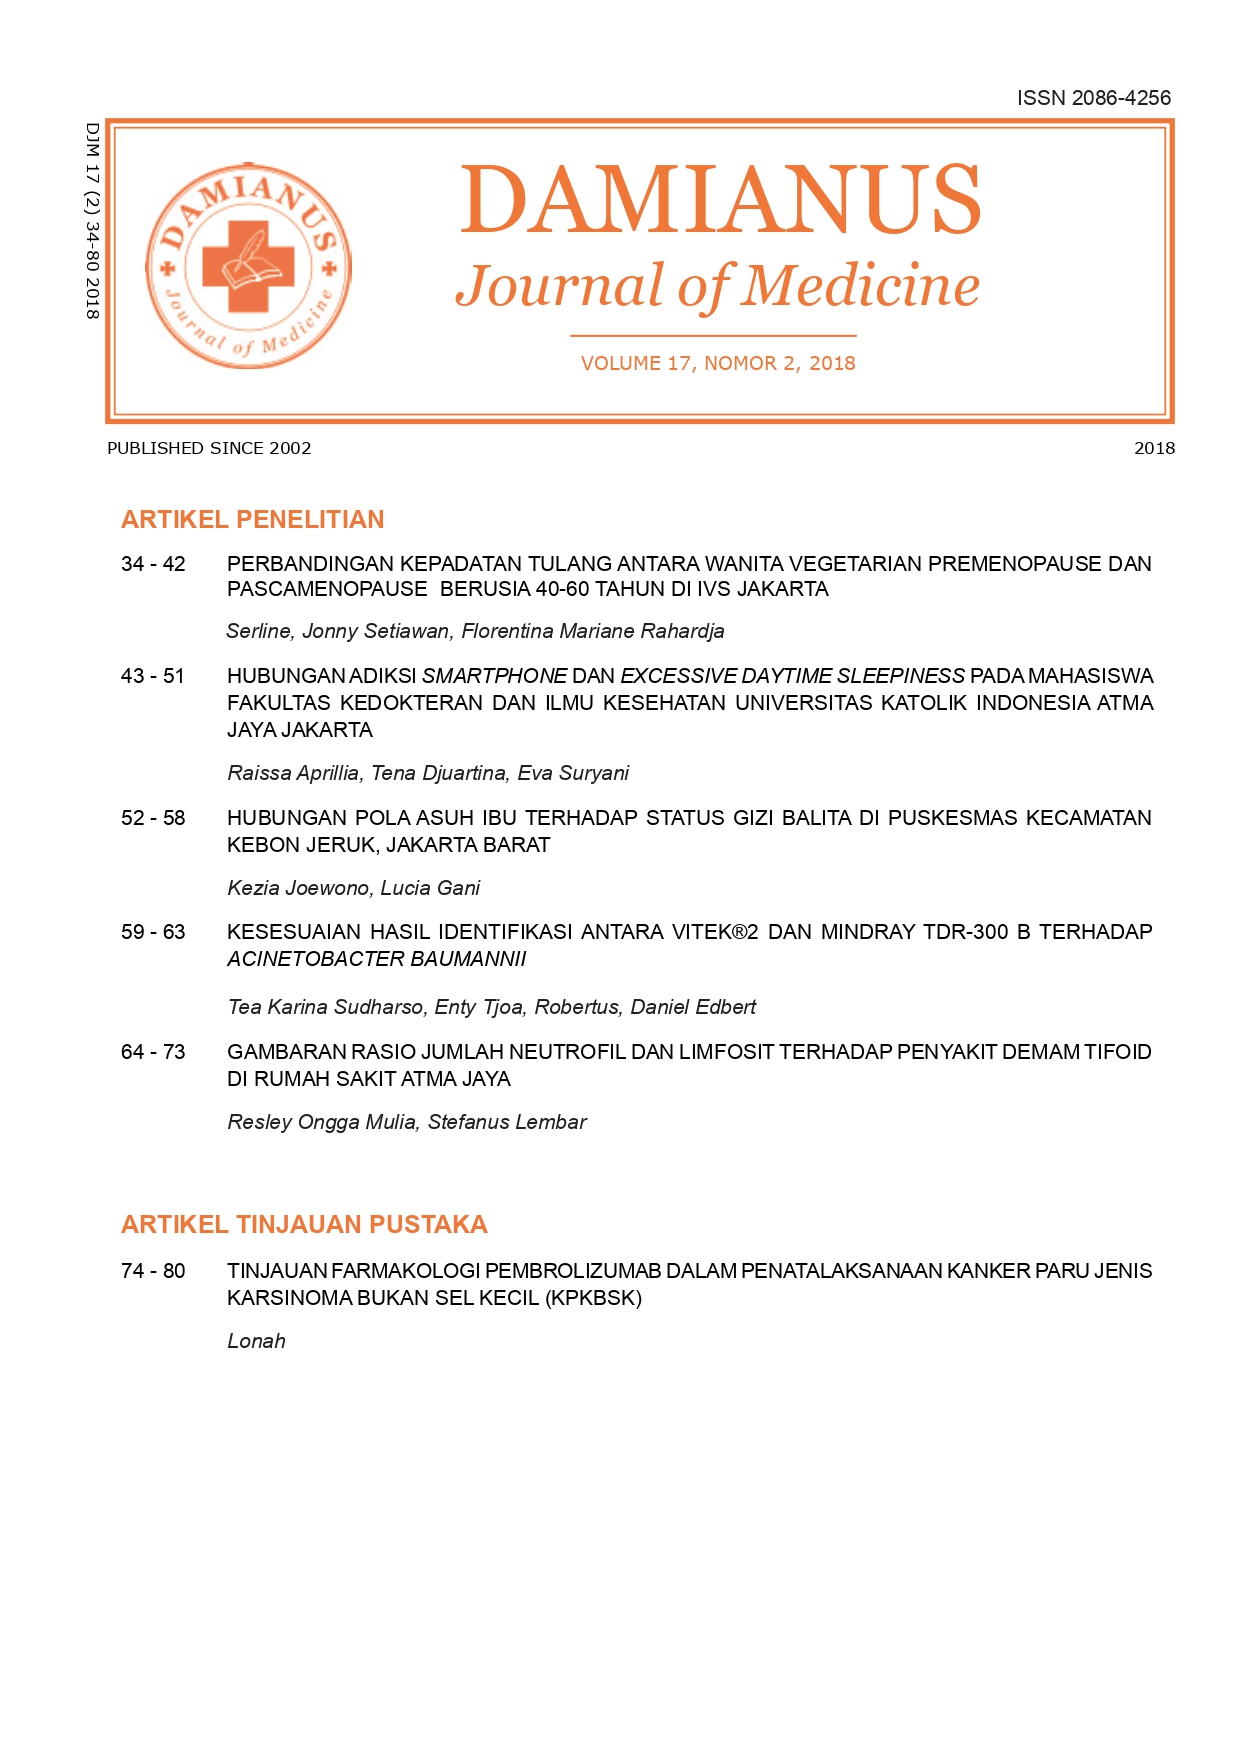 Damianus : Journal of Medicine